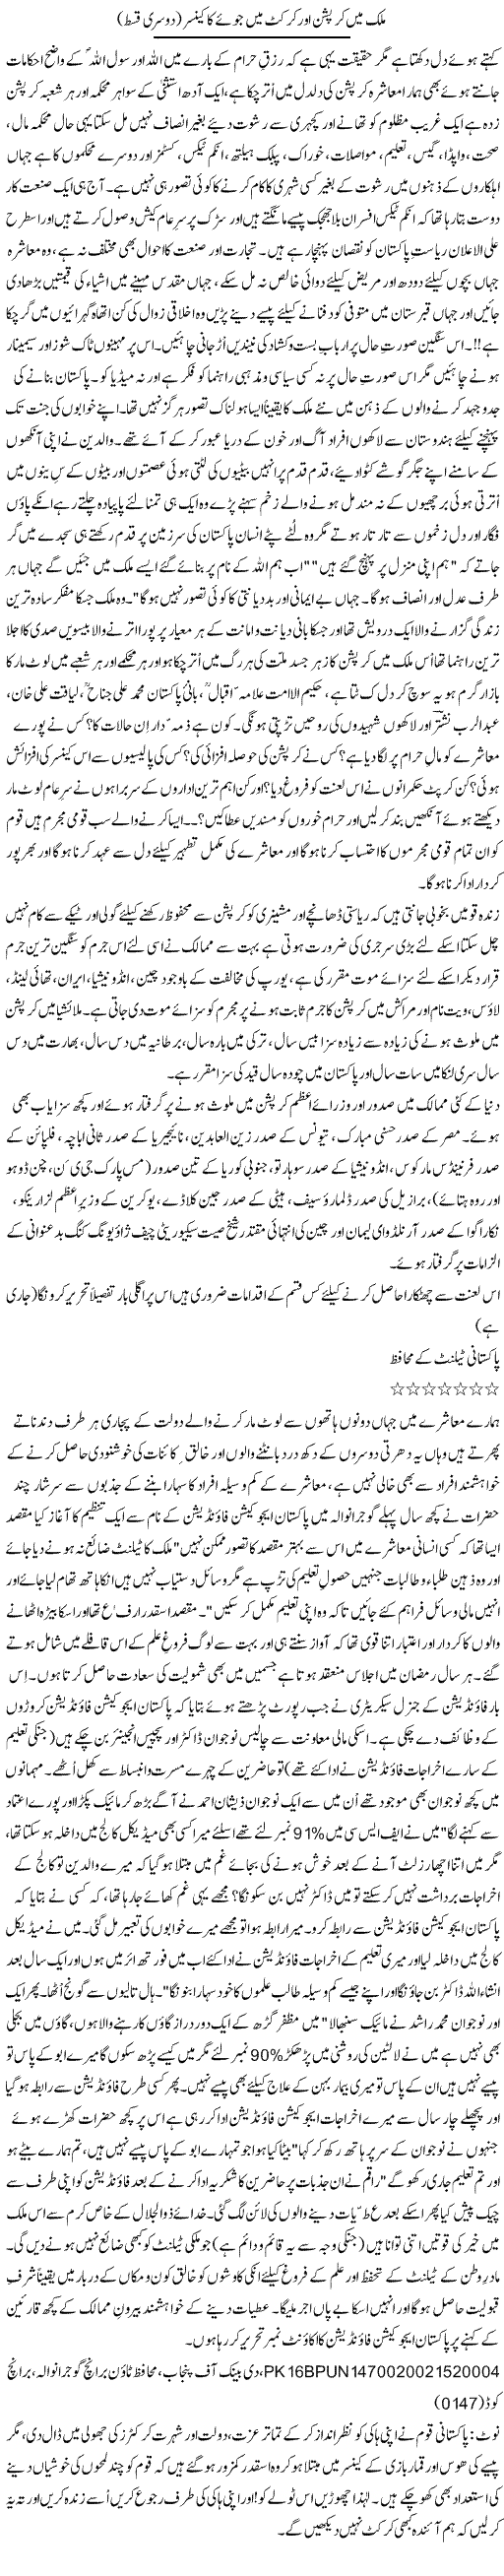 Mulk Mein Corruption Aur Cricket Mein Jue Ka Cancer (2) | Zulfiqar Ahmed Cheema | Daily Urdu Columns